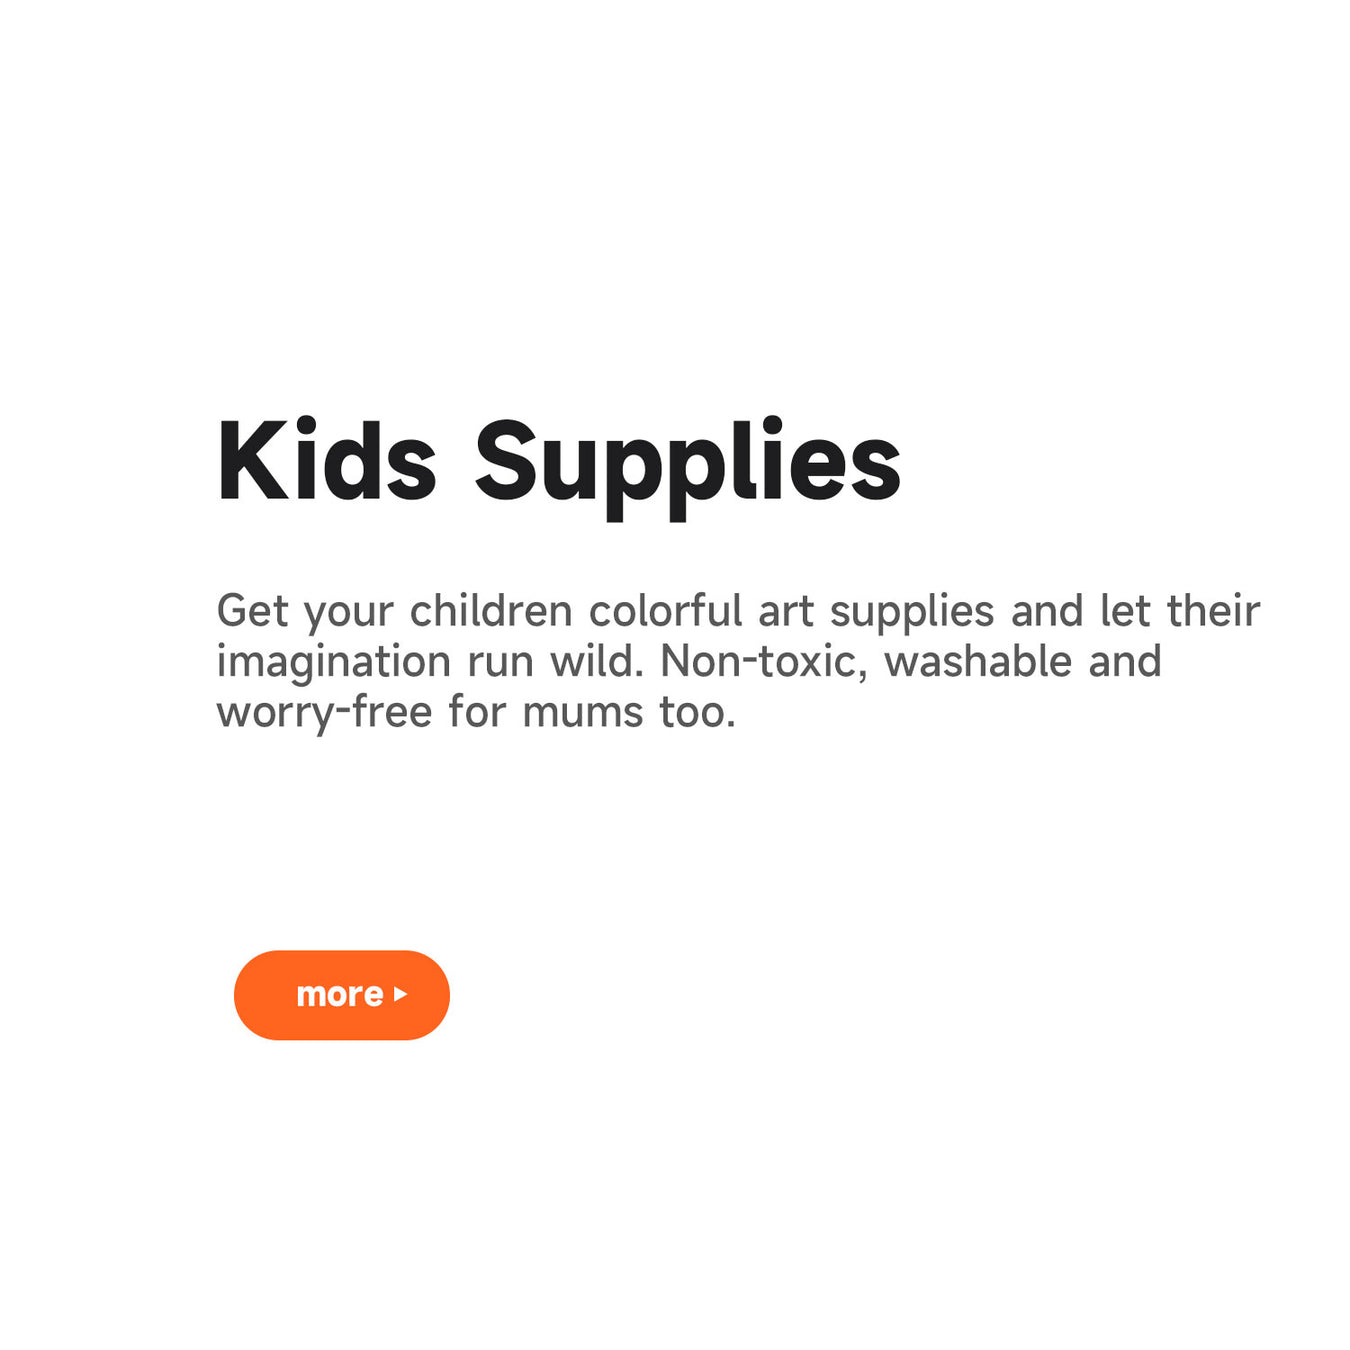 Kids Supplies